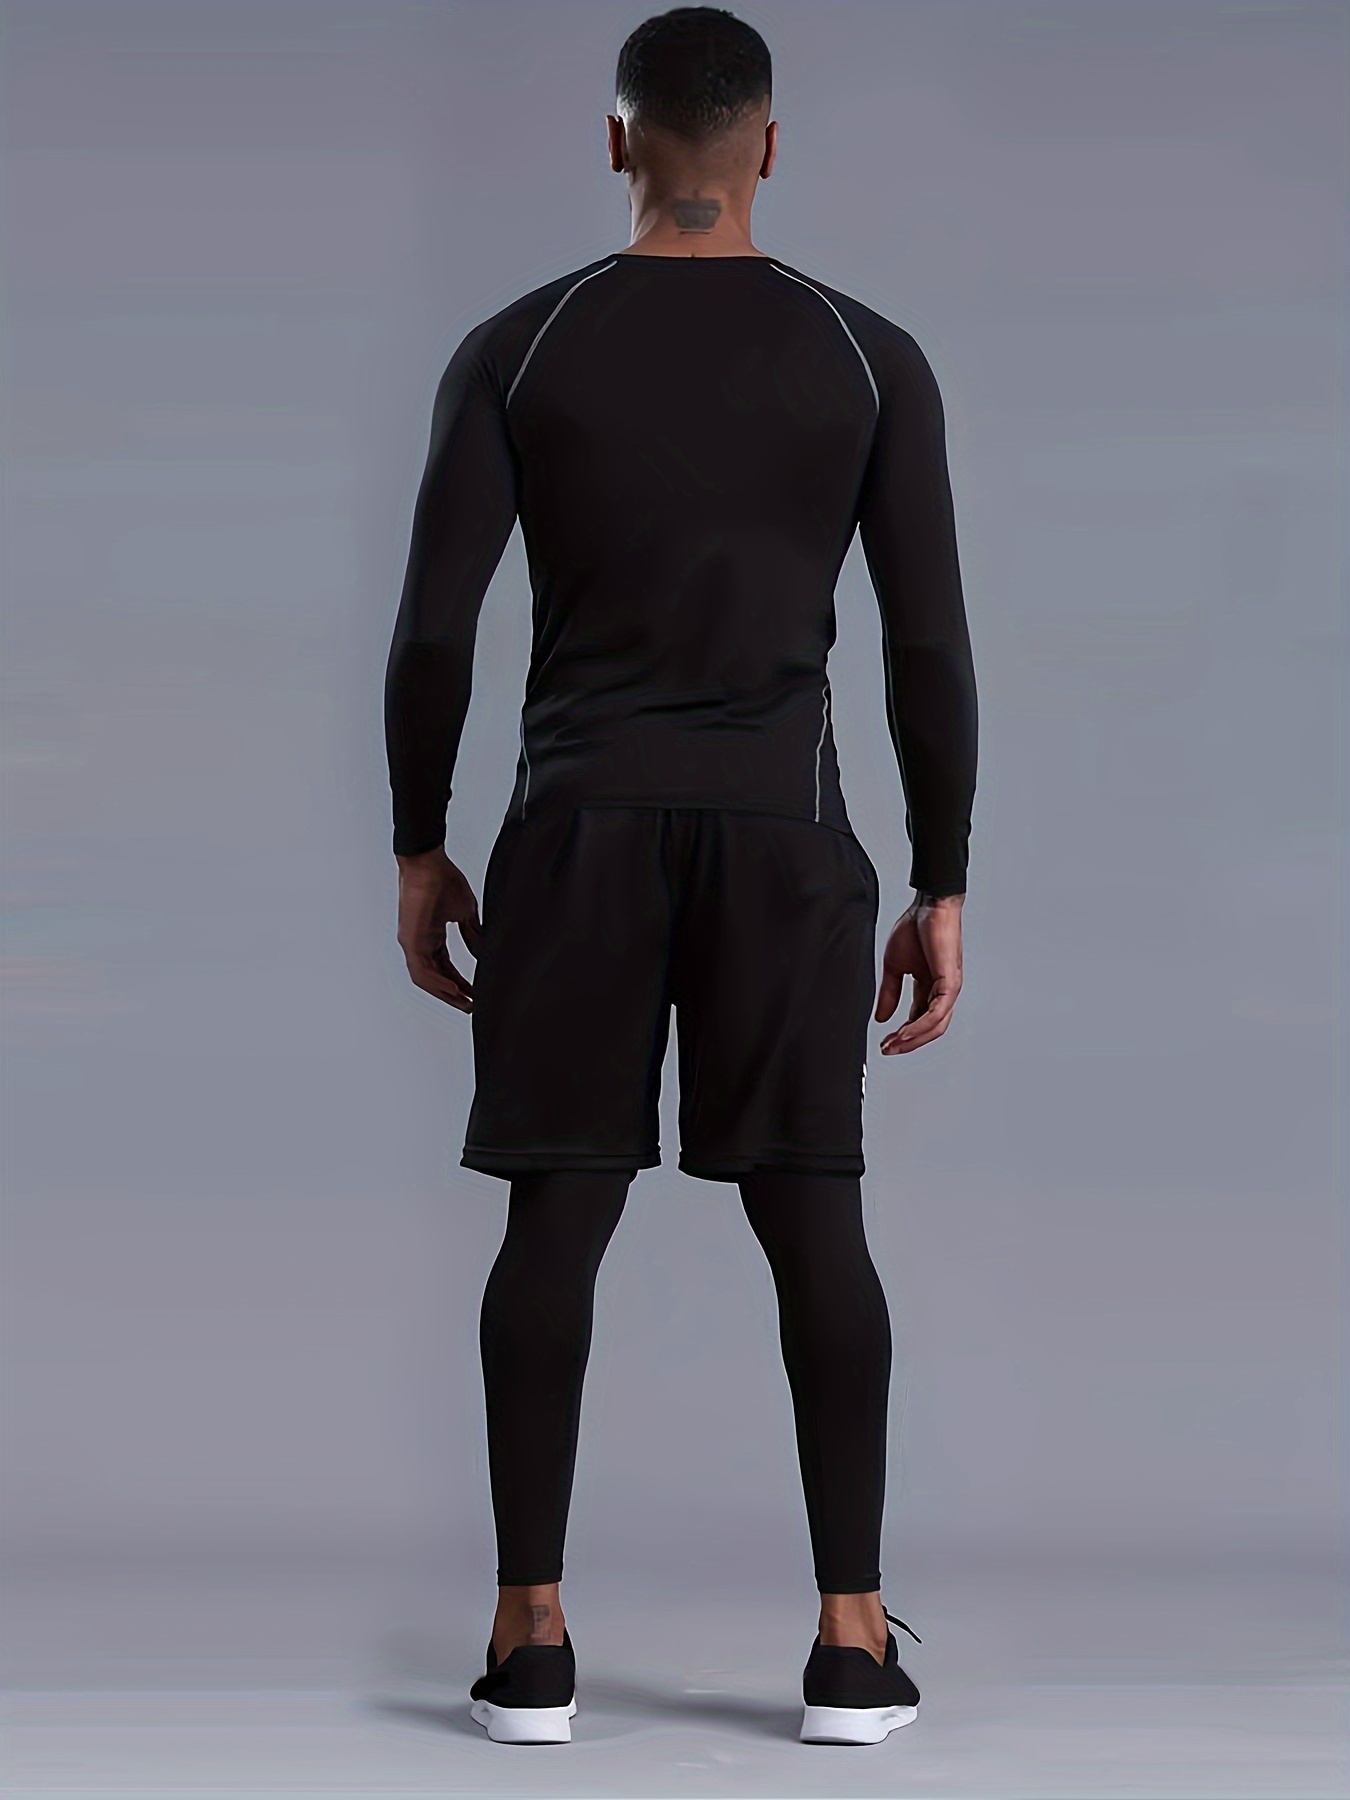 Nike Thermal Cycling Bib Tights - Size Men's Large - sporting